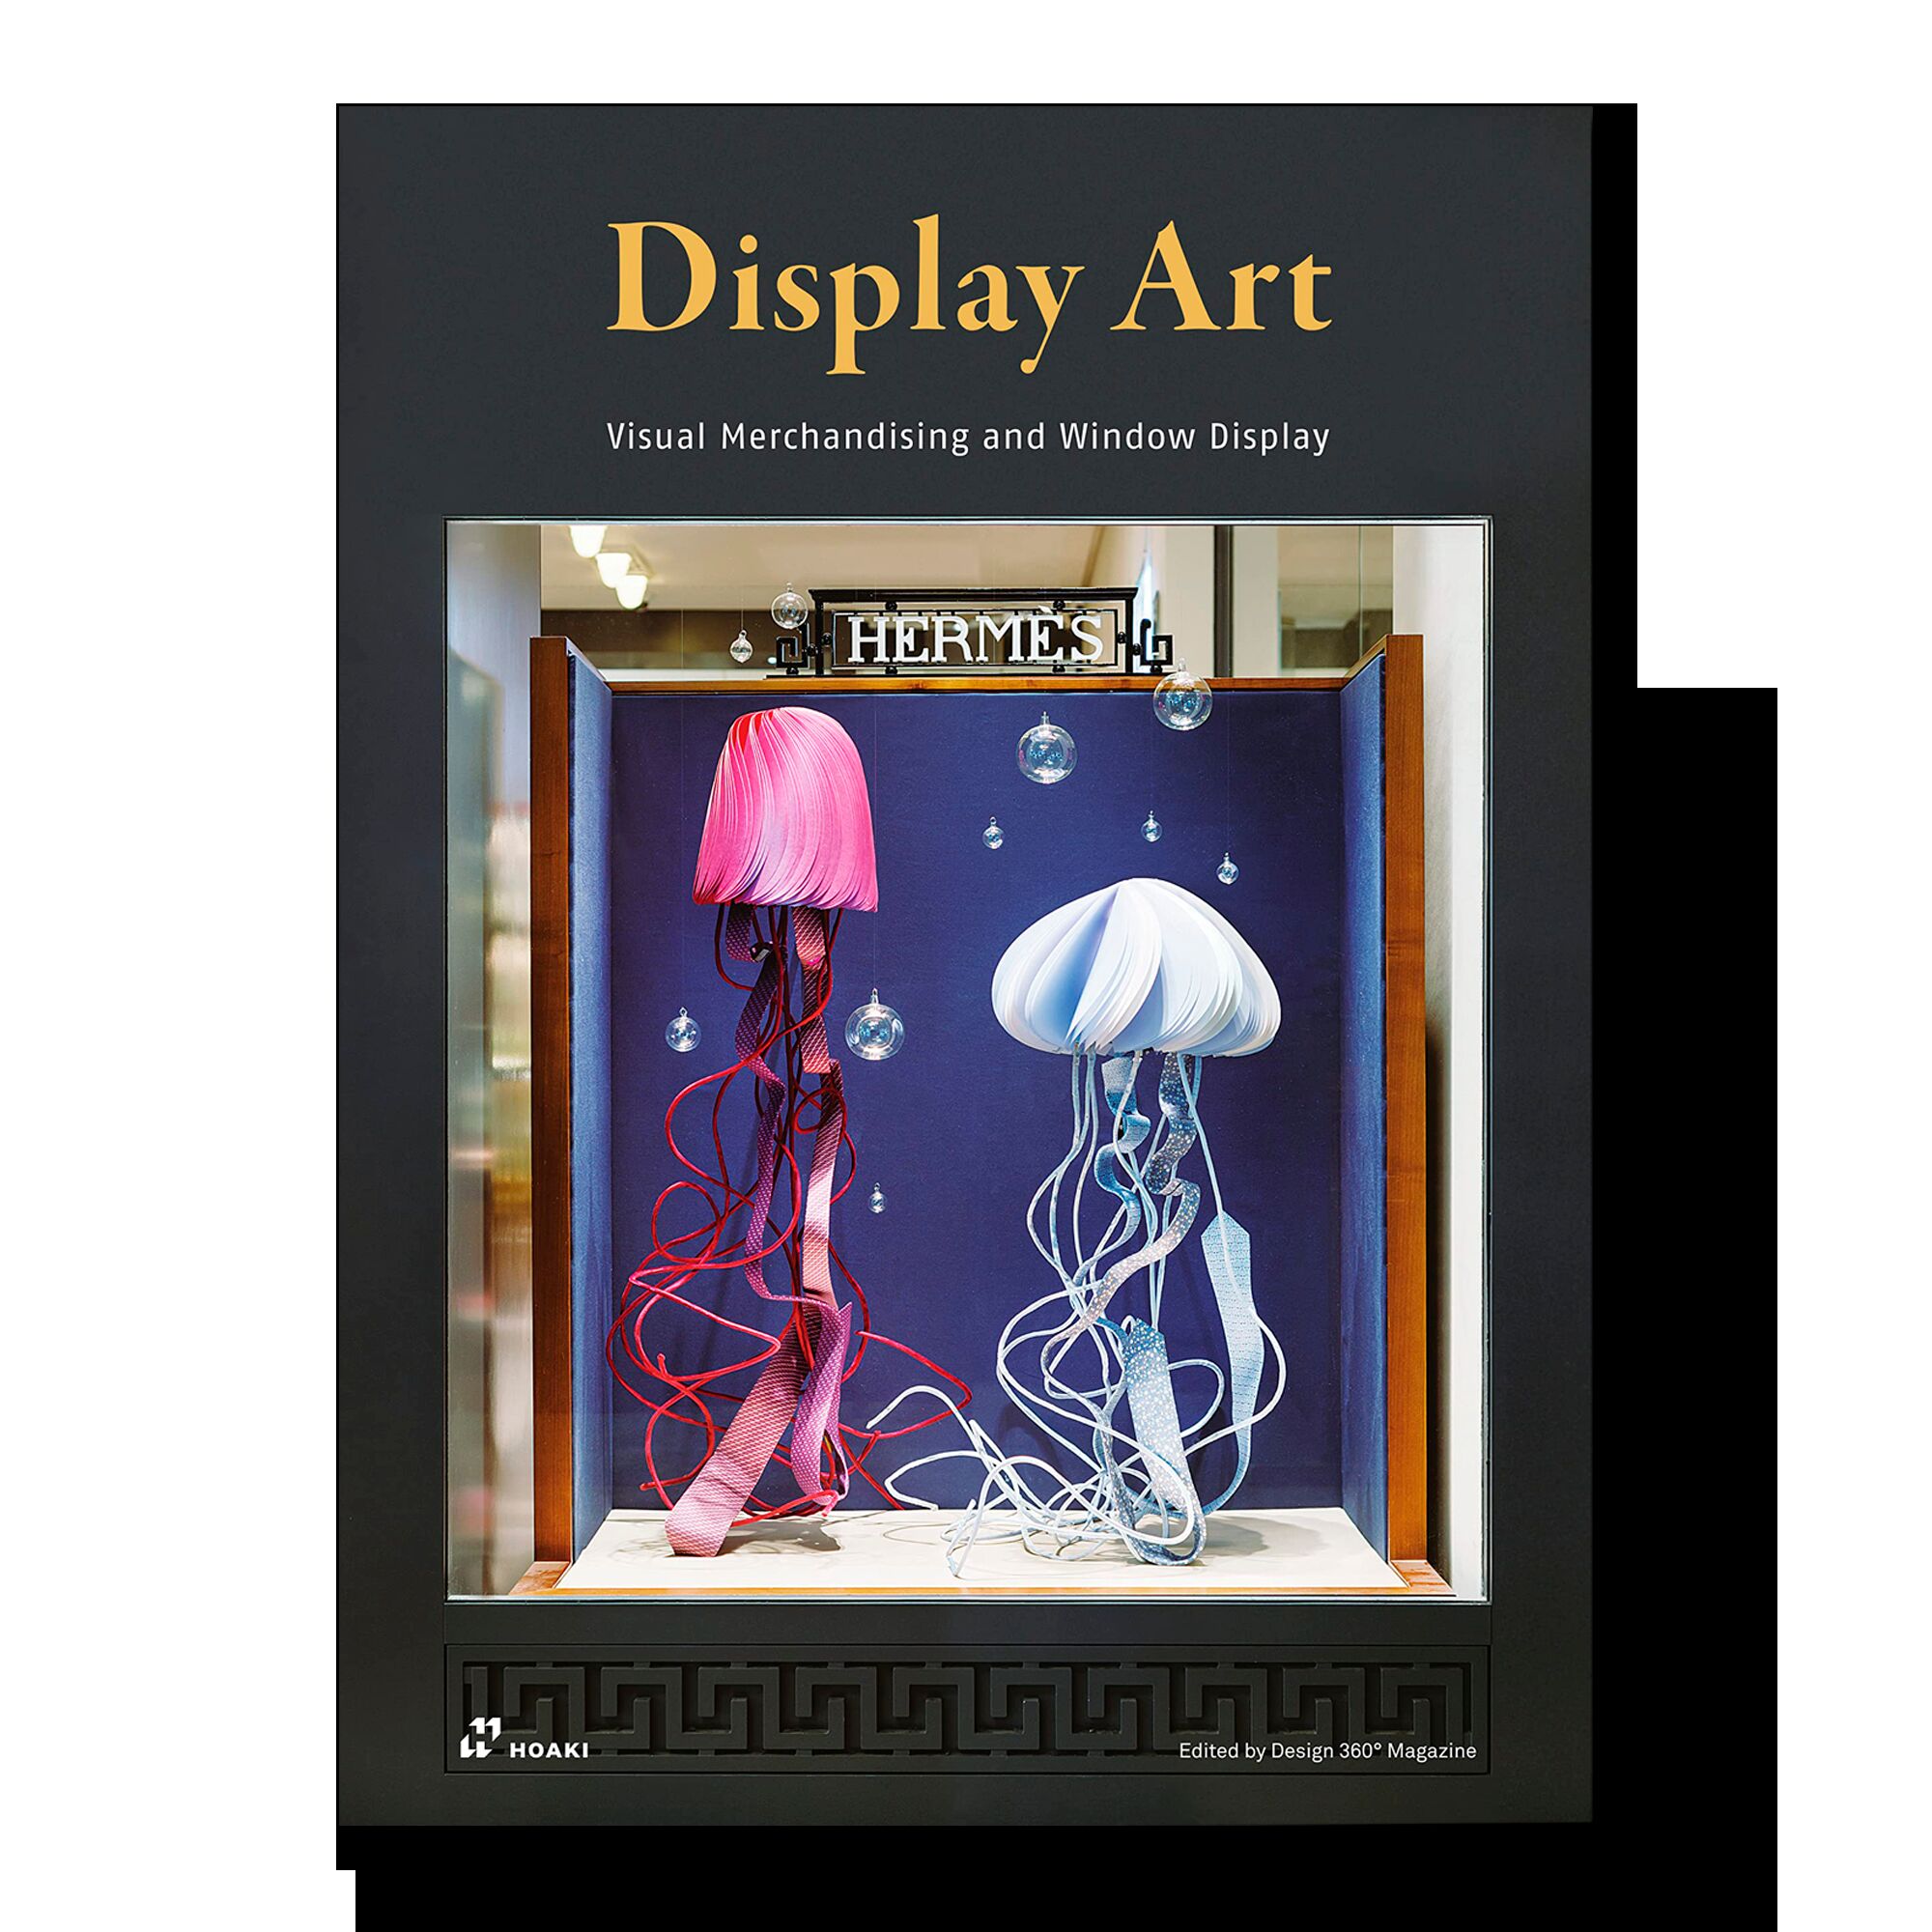 Display Art: Visual Merchandising and Window Display